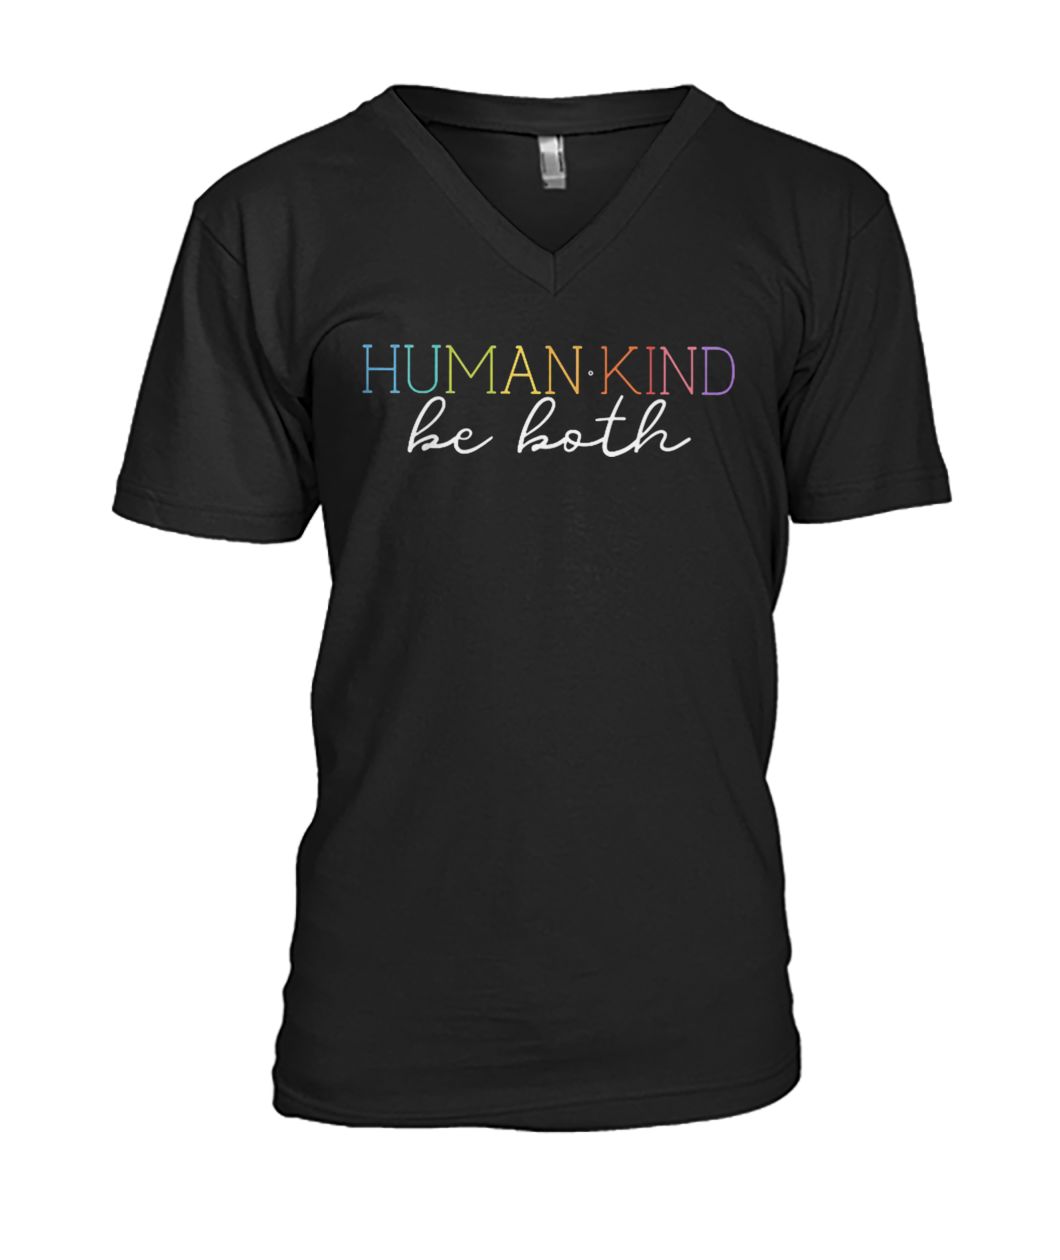 Humankind be both mens v-neck